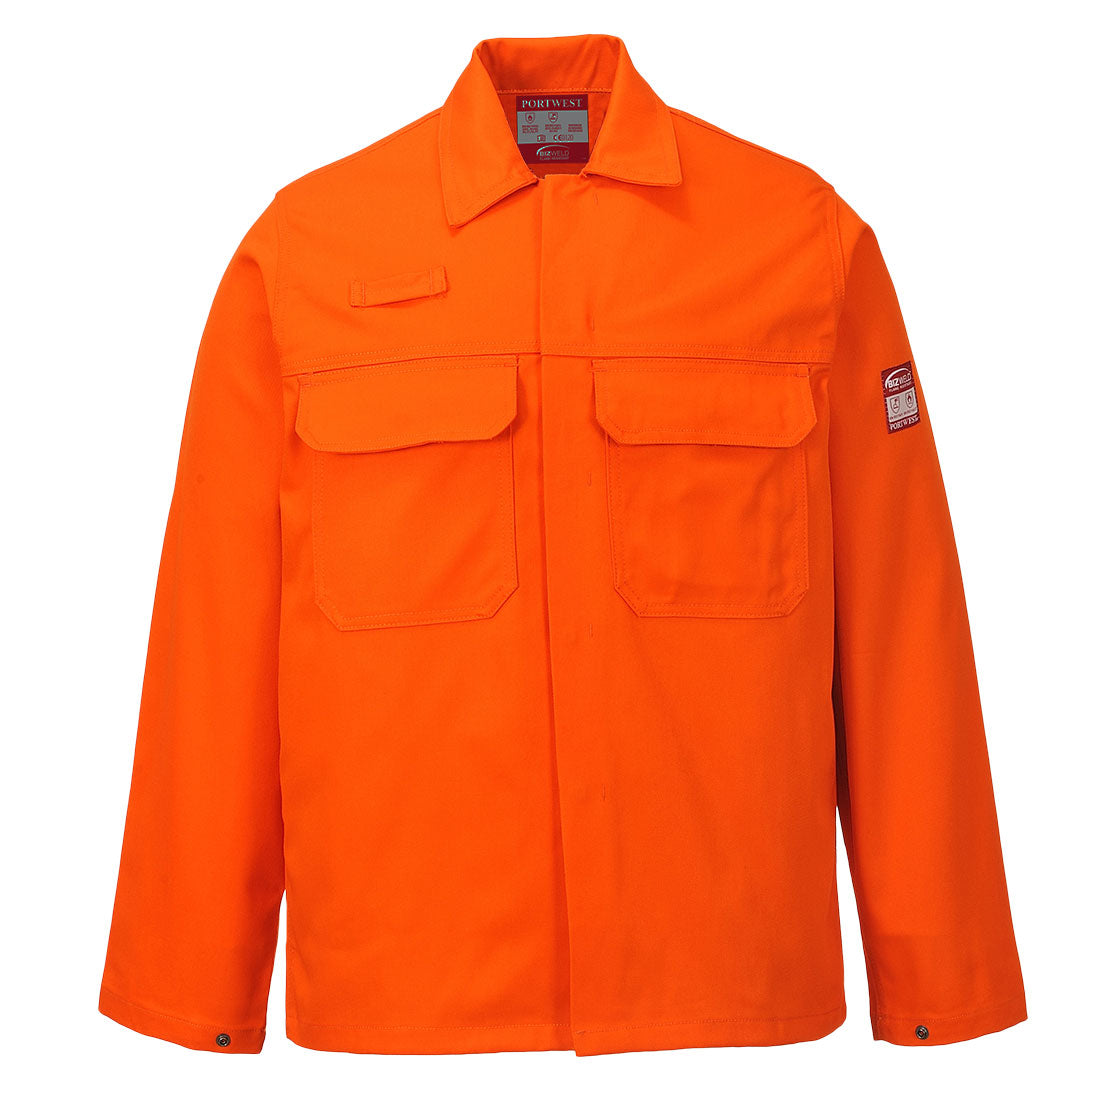 Portwest Bizweld BIZ2 Flame Resistant Welding Workwear Hazard Protection Jacket - Hamtons Direct